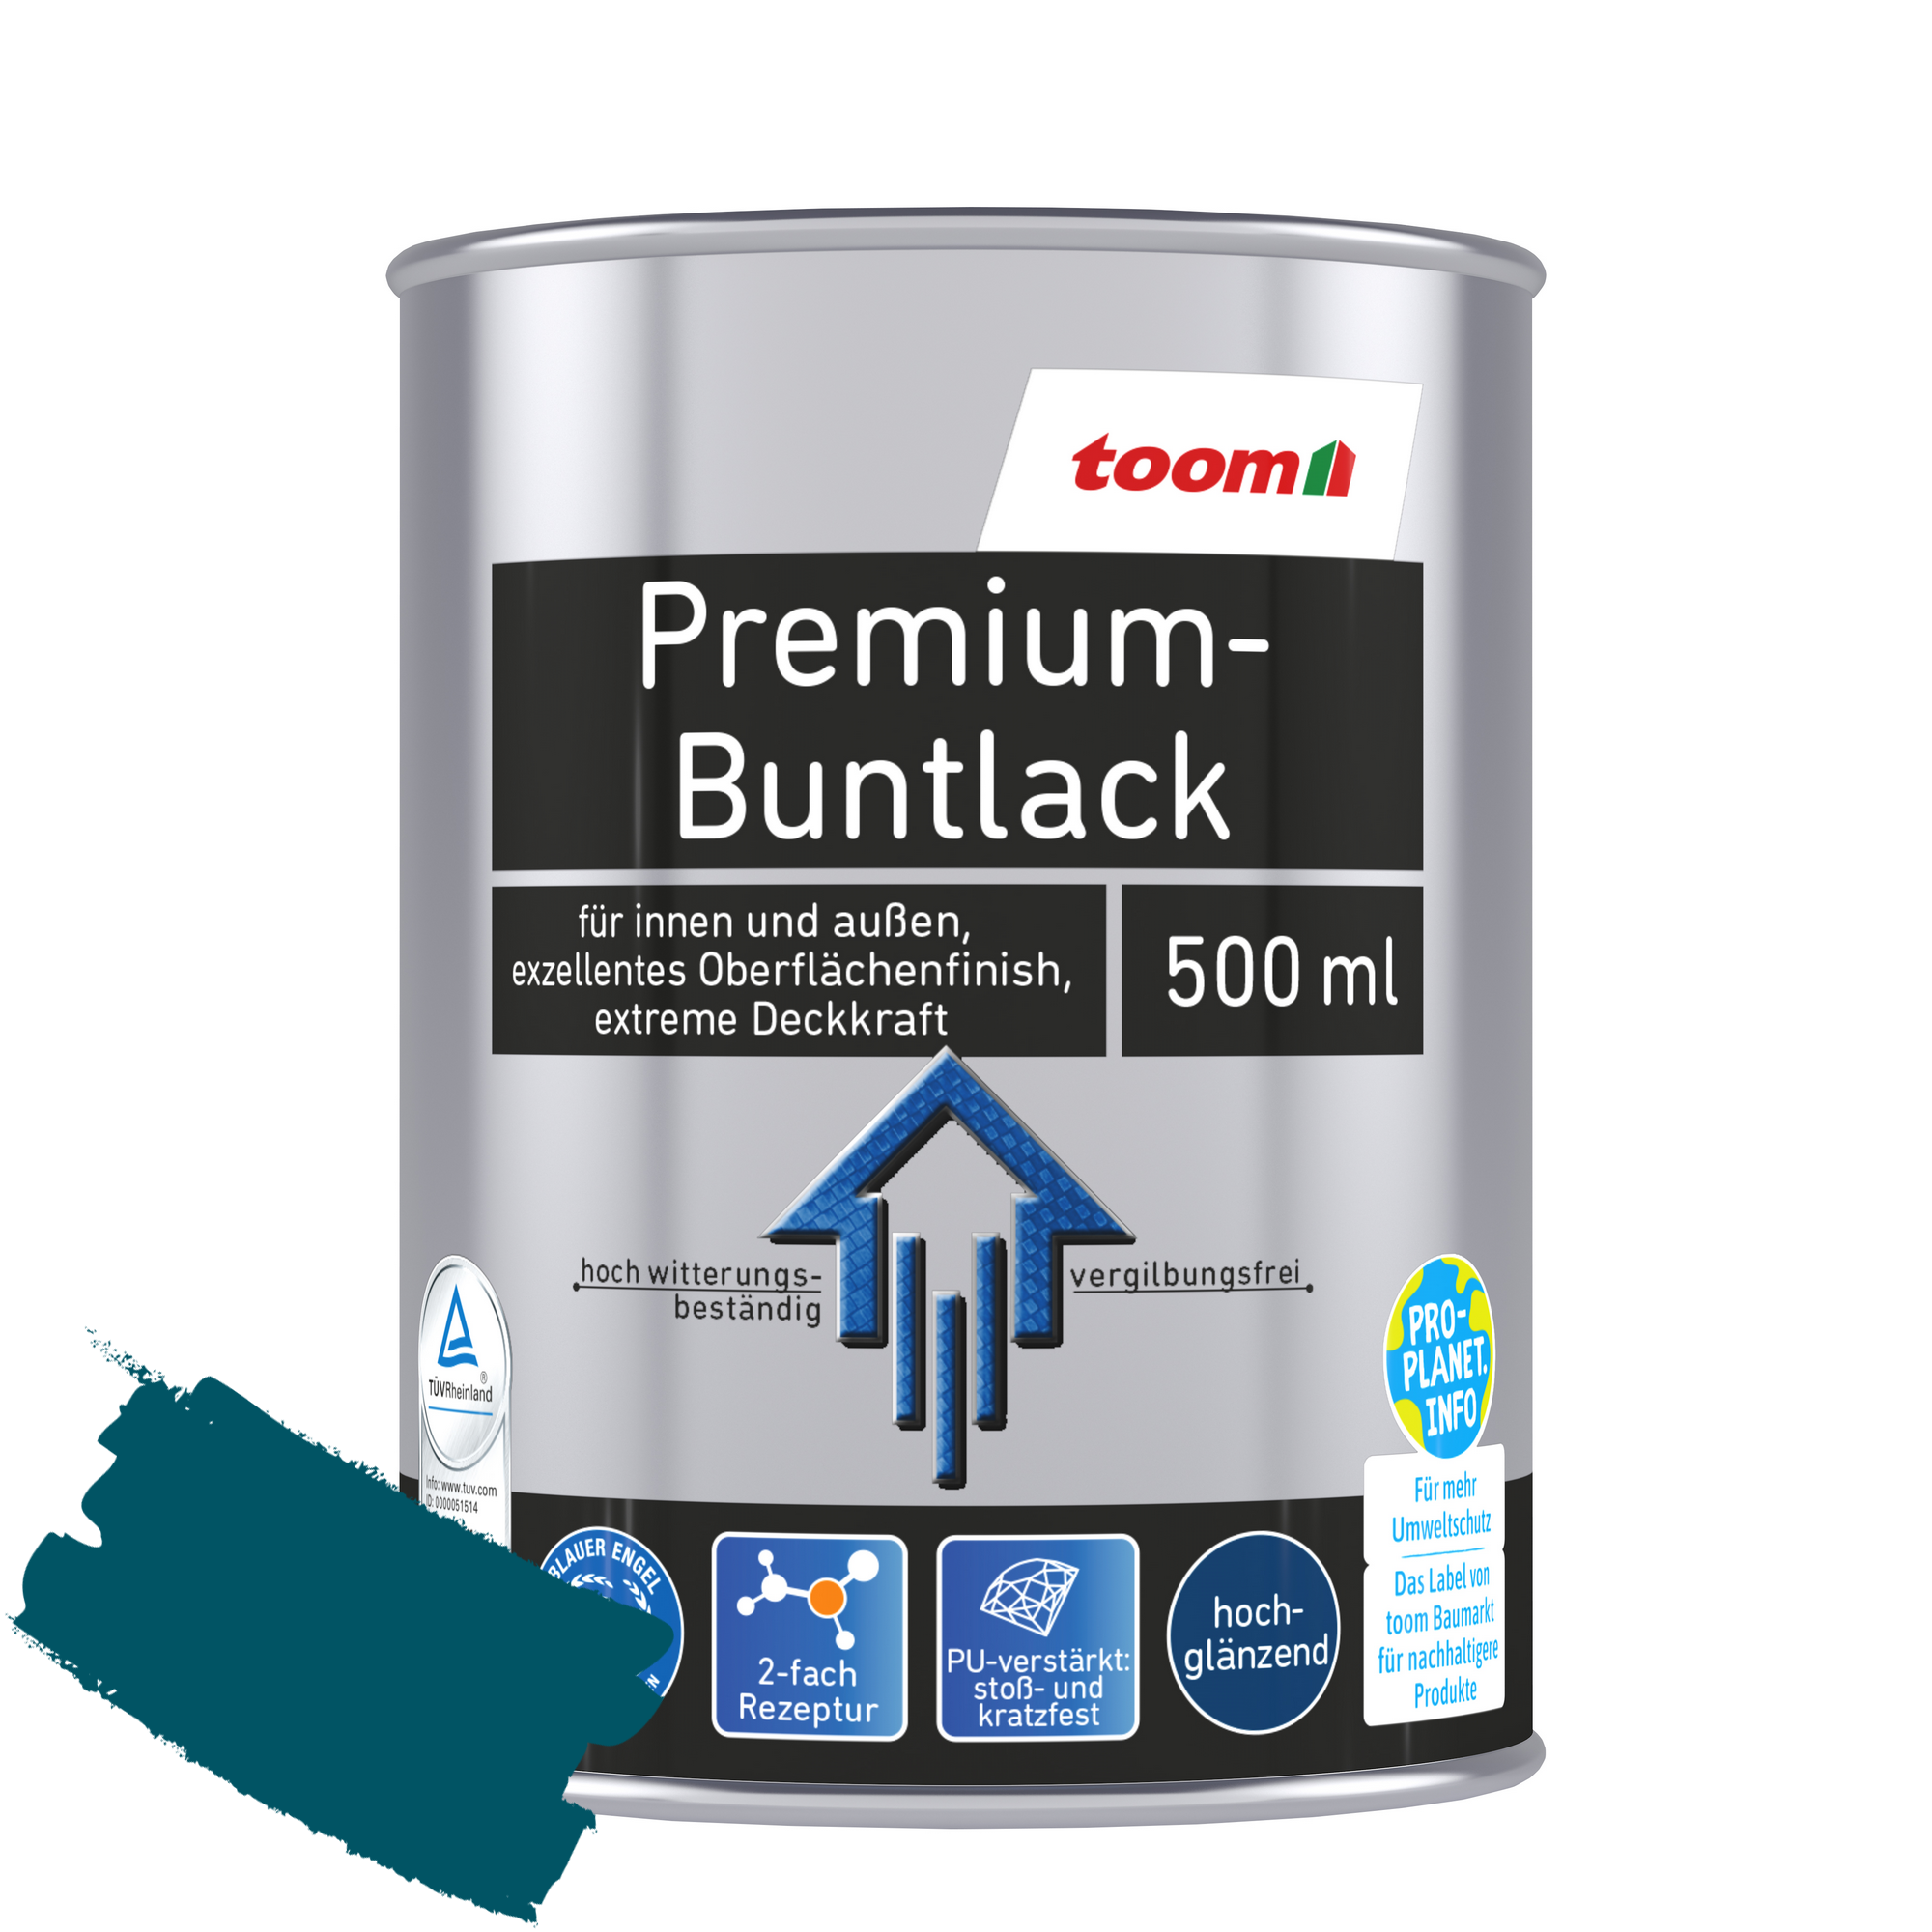 Premium-Buntlack petrolfarben glänzend 500 ml + product picture